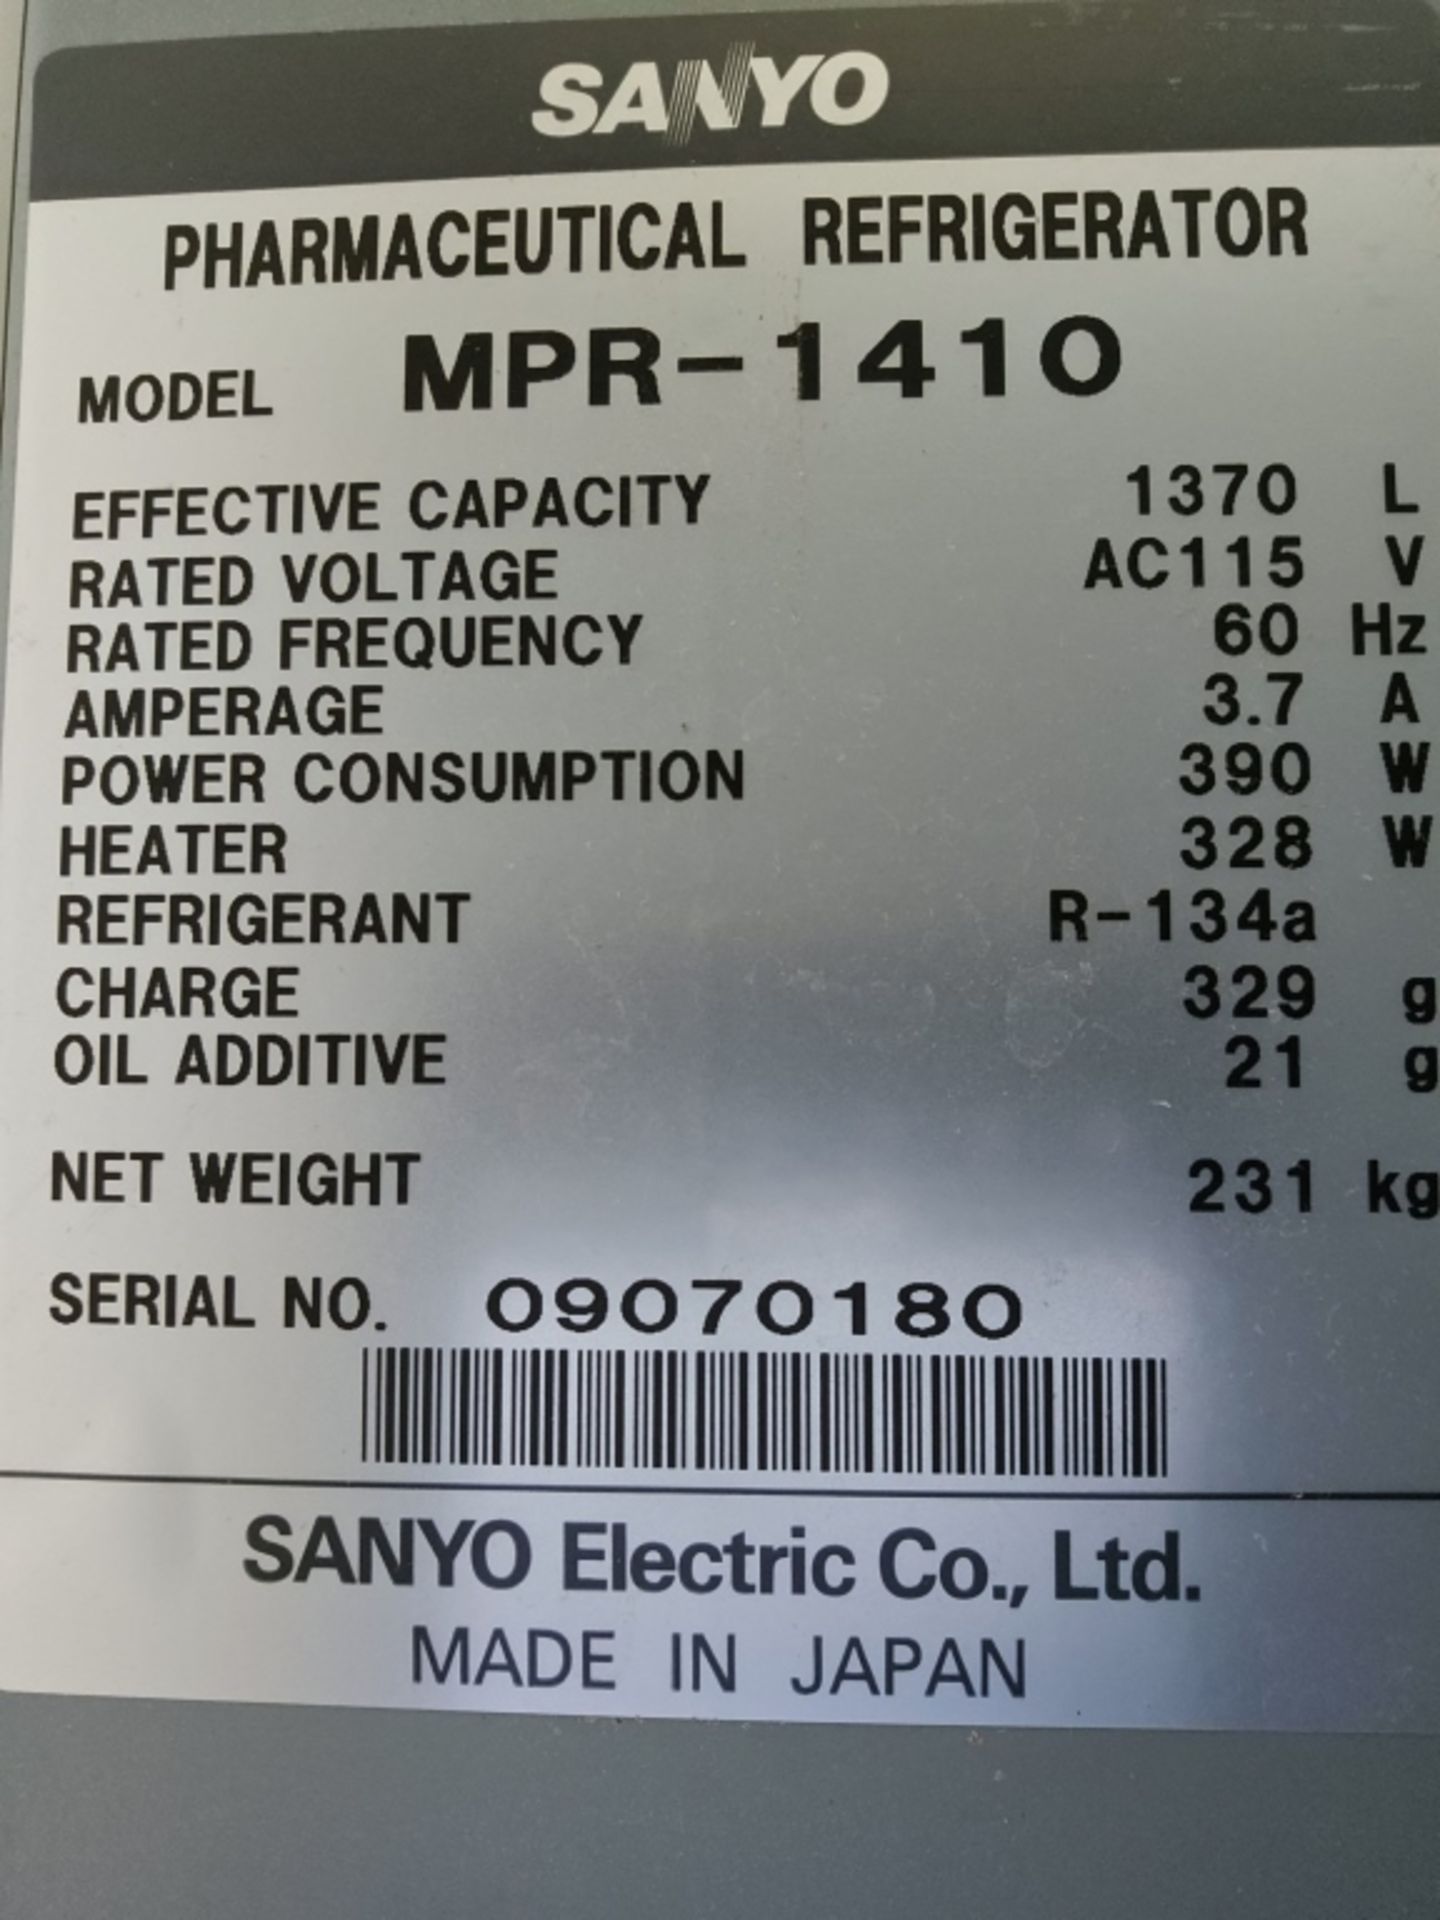 Sanyo Model MPR-1410 Pharmaceutical Refrigerator - Image 2 of 2